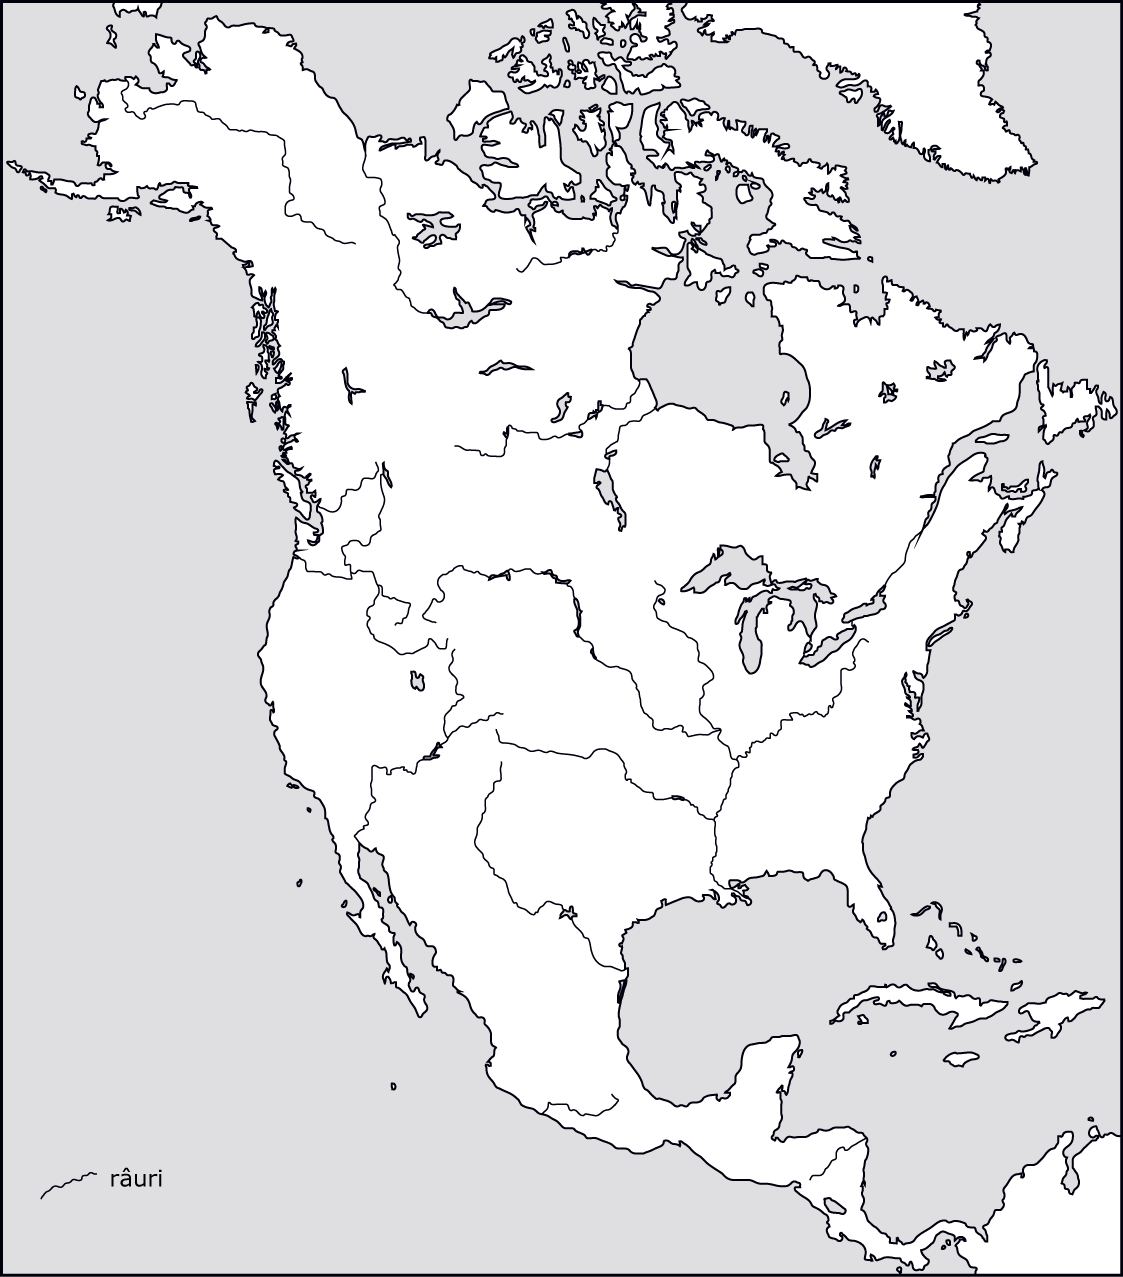 Контурная карта Северной Америки. Севрнаяамерика контурнаякарта. Контурная политическая карта Северной Америки для печати. Физическая контурная карта Северной Америки.